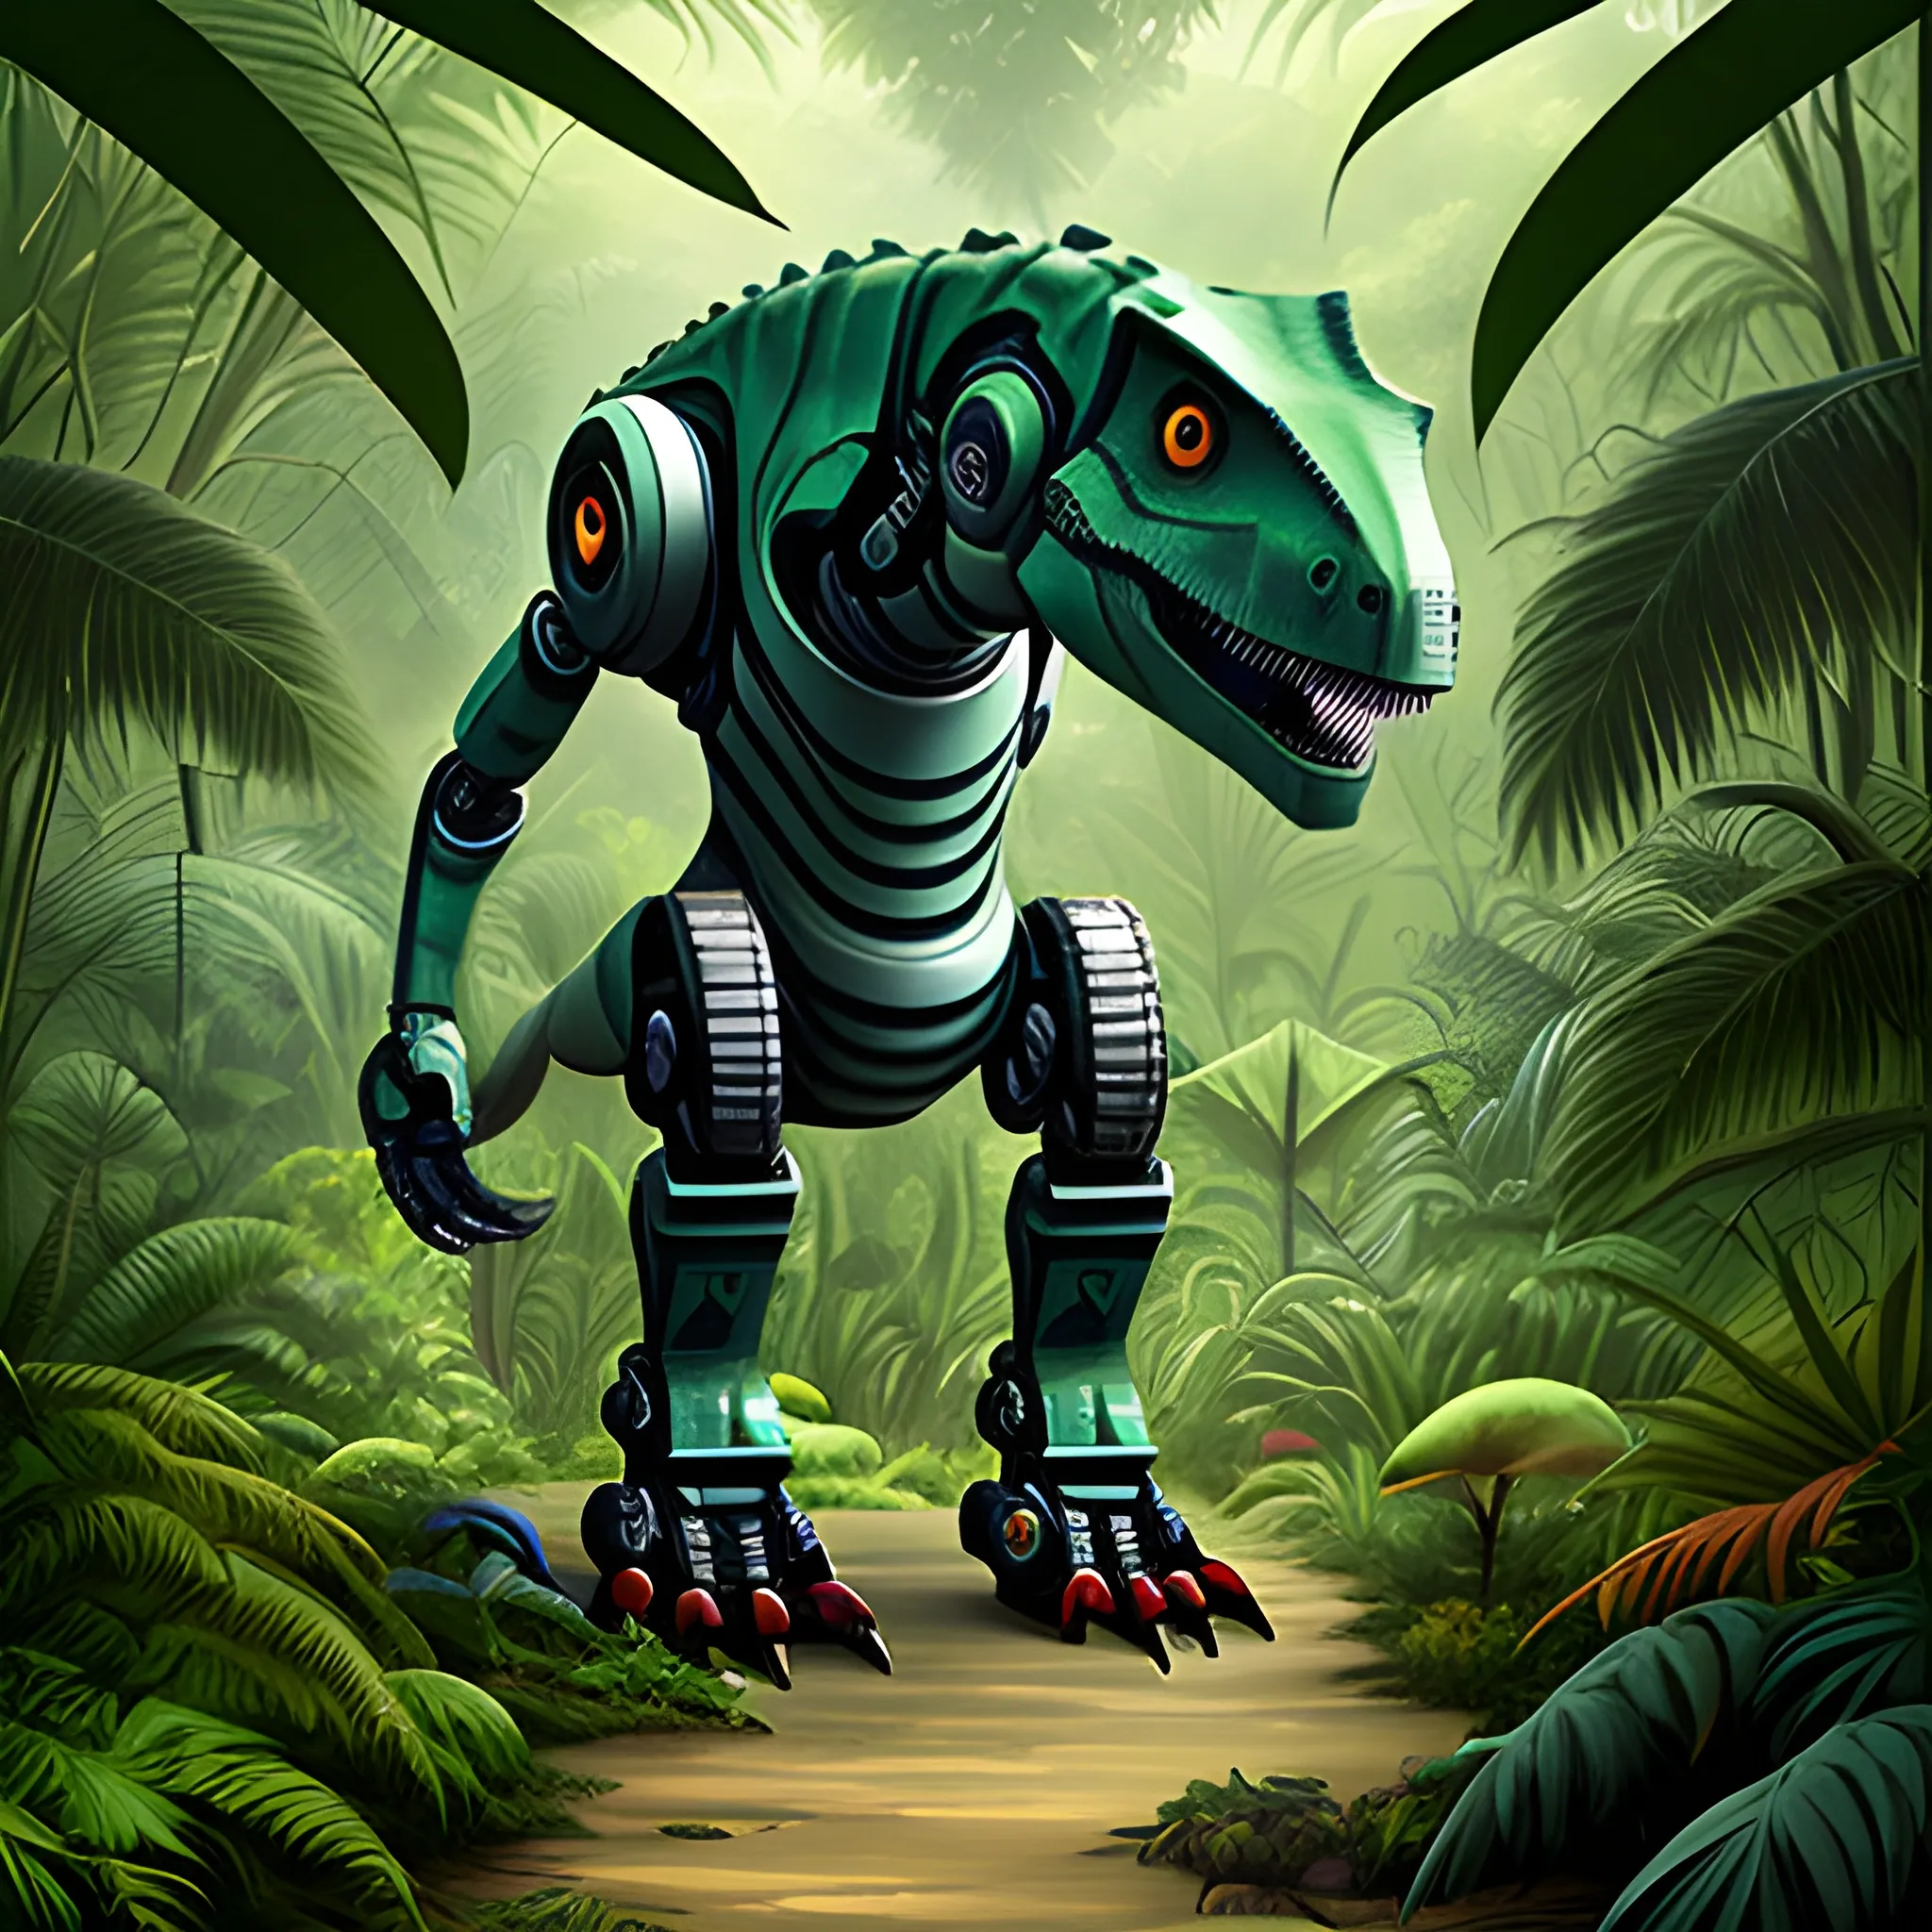 robot dinosaur in a jungle

